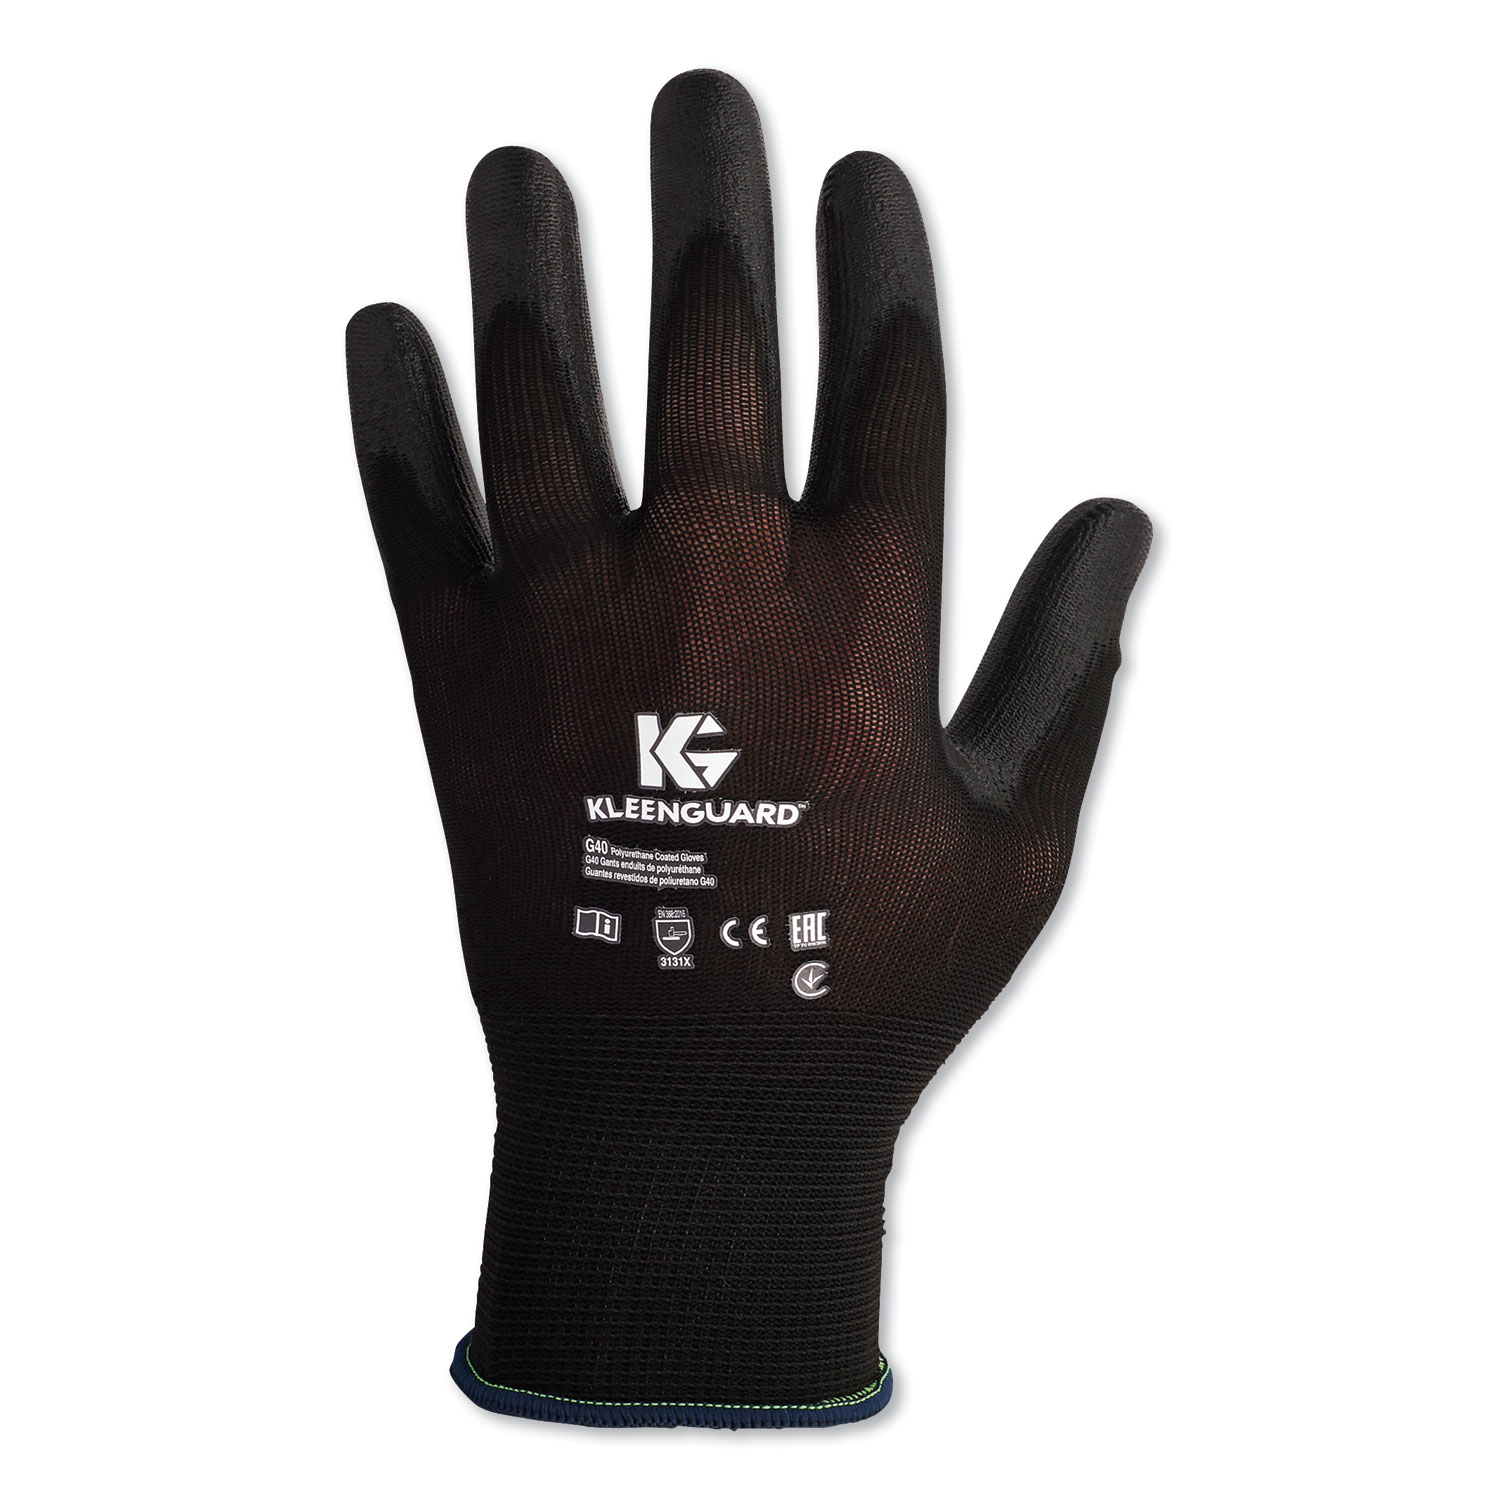  KleenGuard 13837 G40 Polyurethane Coated Gloves, 220 mm Length, Small, Black, 60 Pairs (KCC13837) 